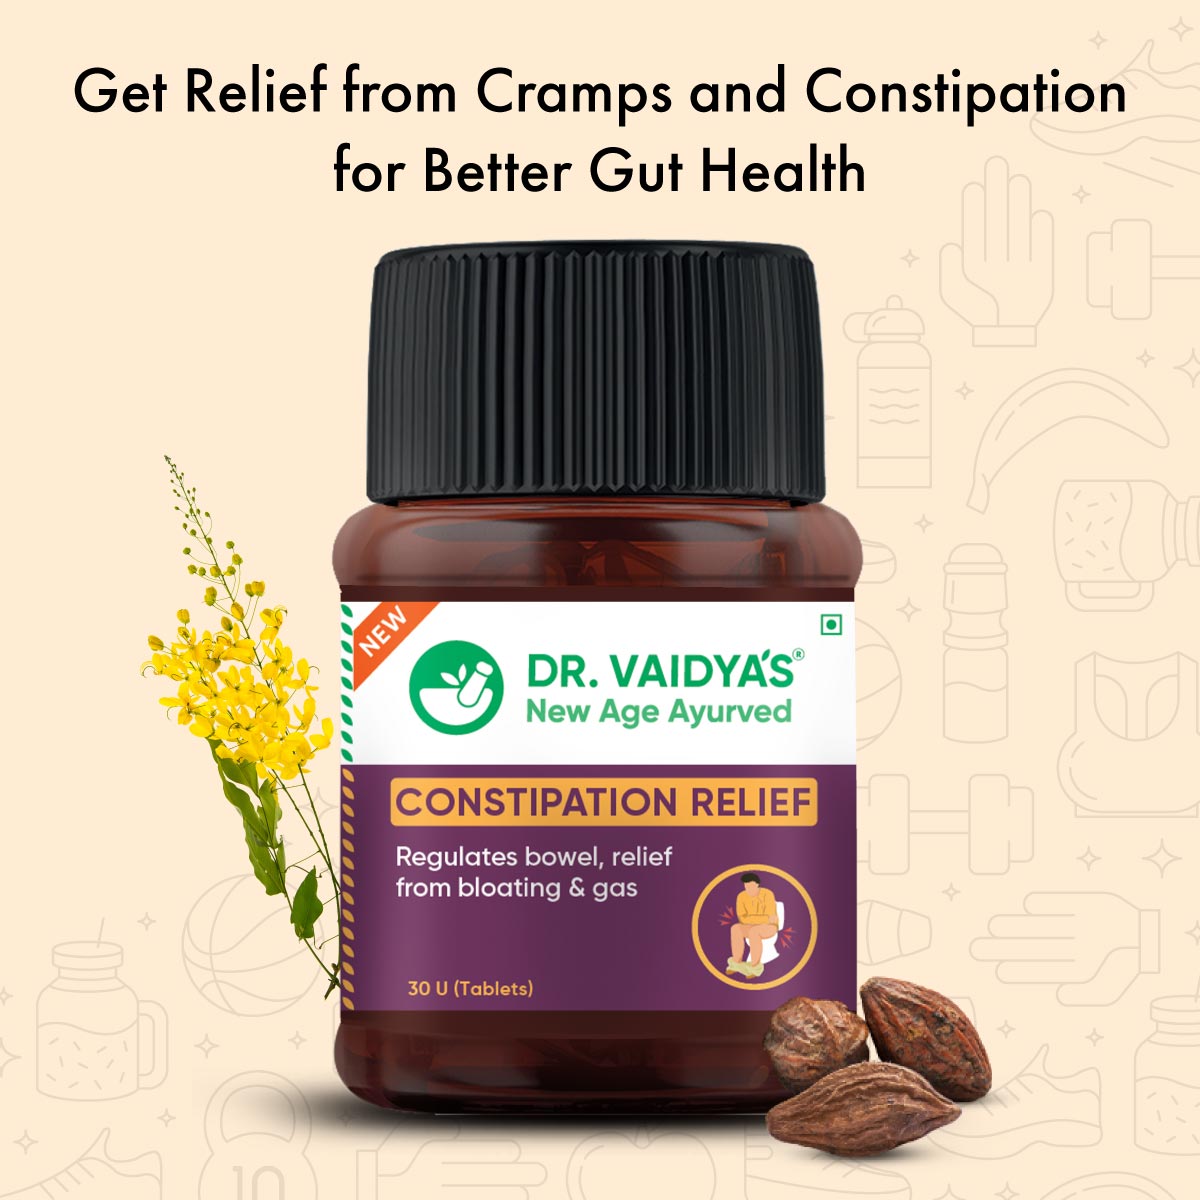 Constipation relief: Ayurvedic Medicine For Constipation